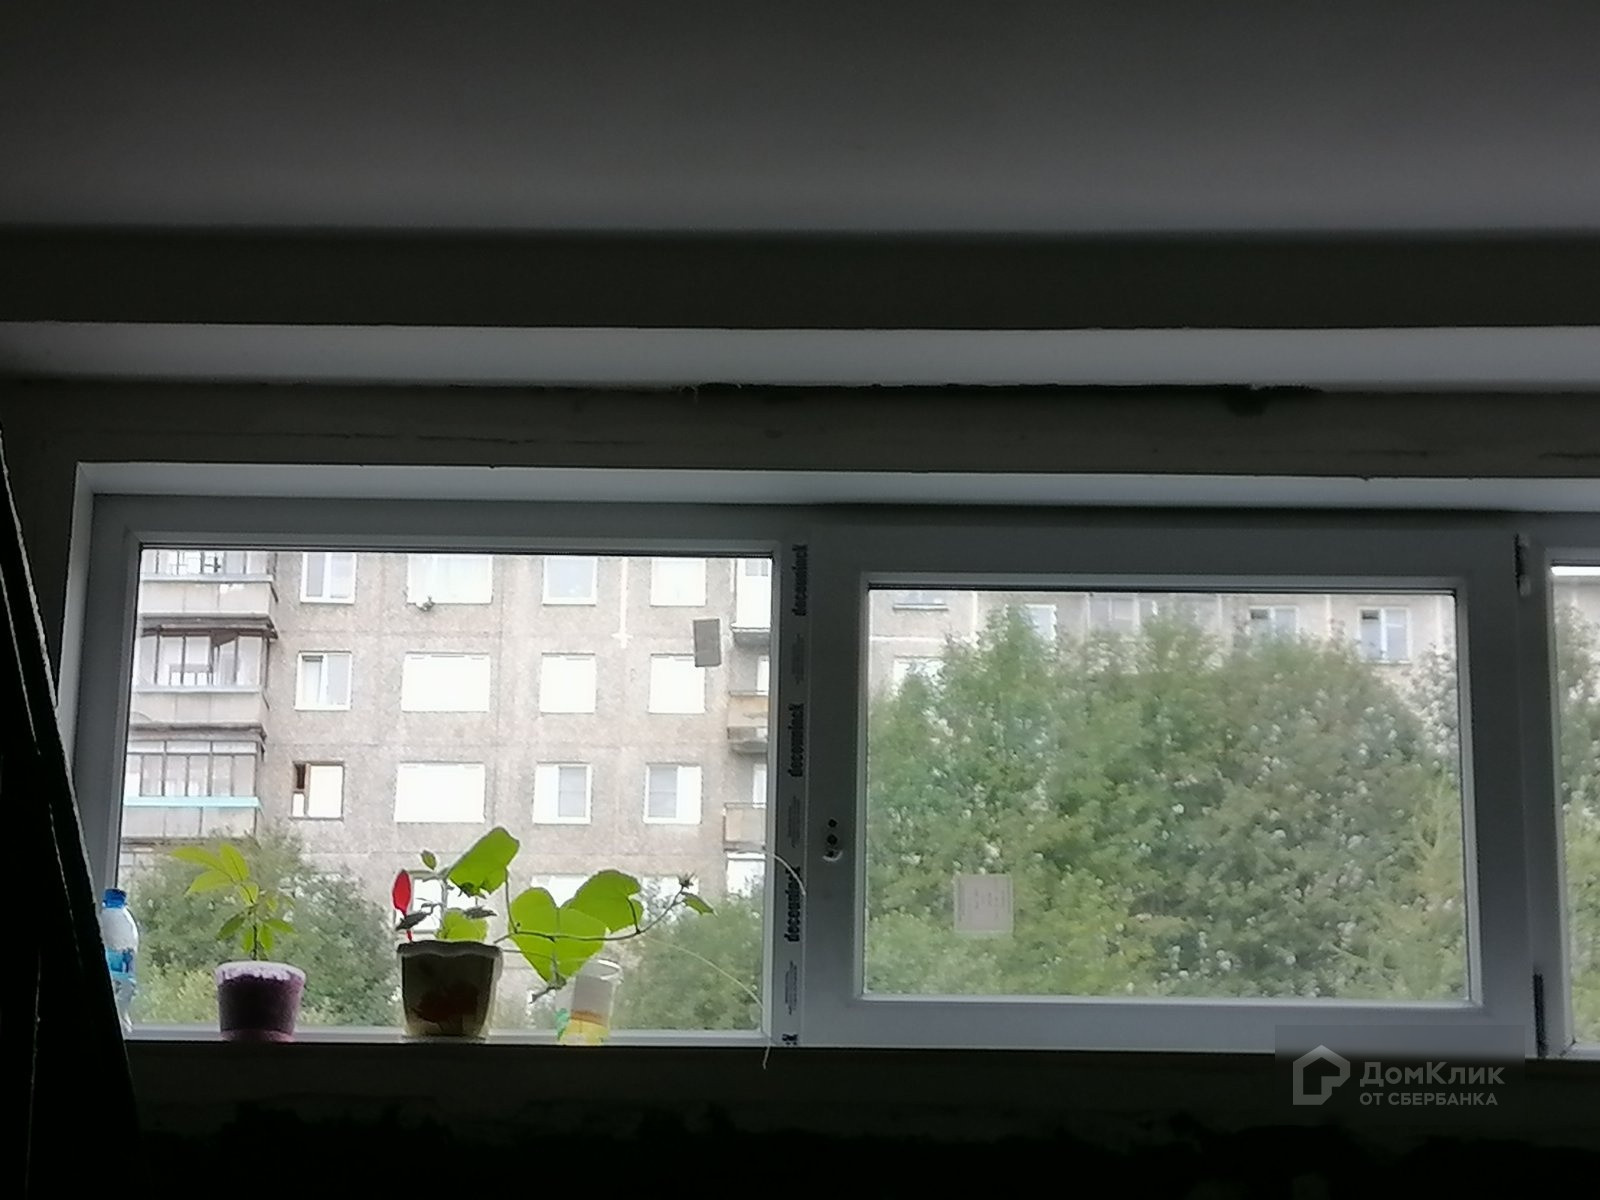 9 Этажа Мурманск квартиры без балкона Мурманск. Домклик мурманск квартиры купить